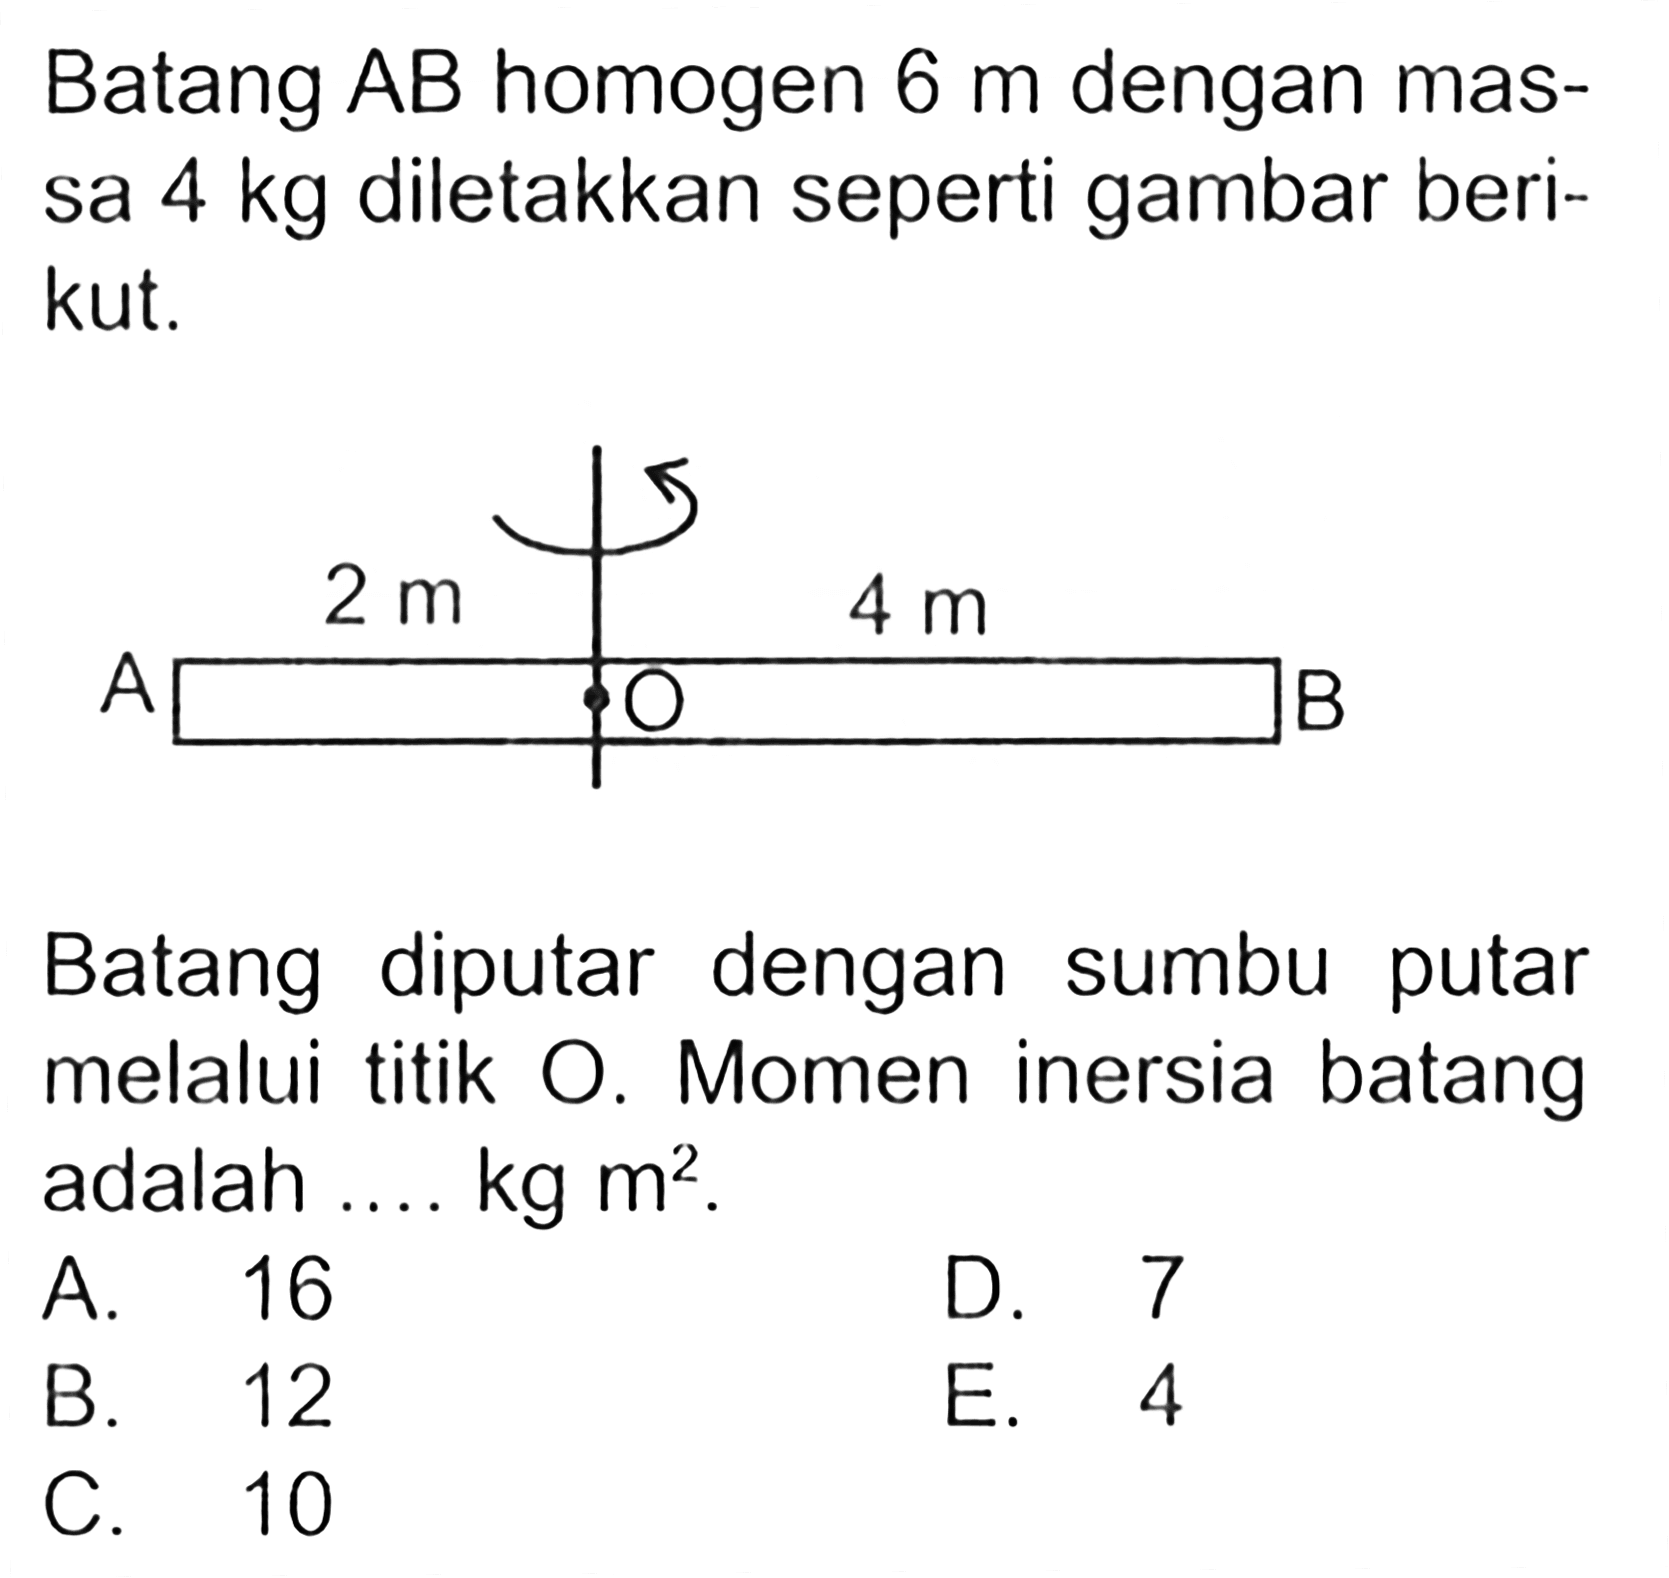 Batang AB homogen 6 m dengan mas- sa 4 kg diletakkan seperti gambar beri- kut. Batang diputar dengan sumbu putar melalui titik O. Momen inersia batang adalah .... kg m^2 .